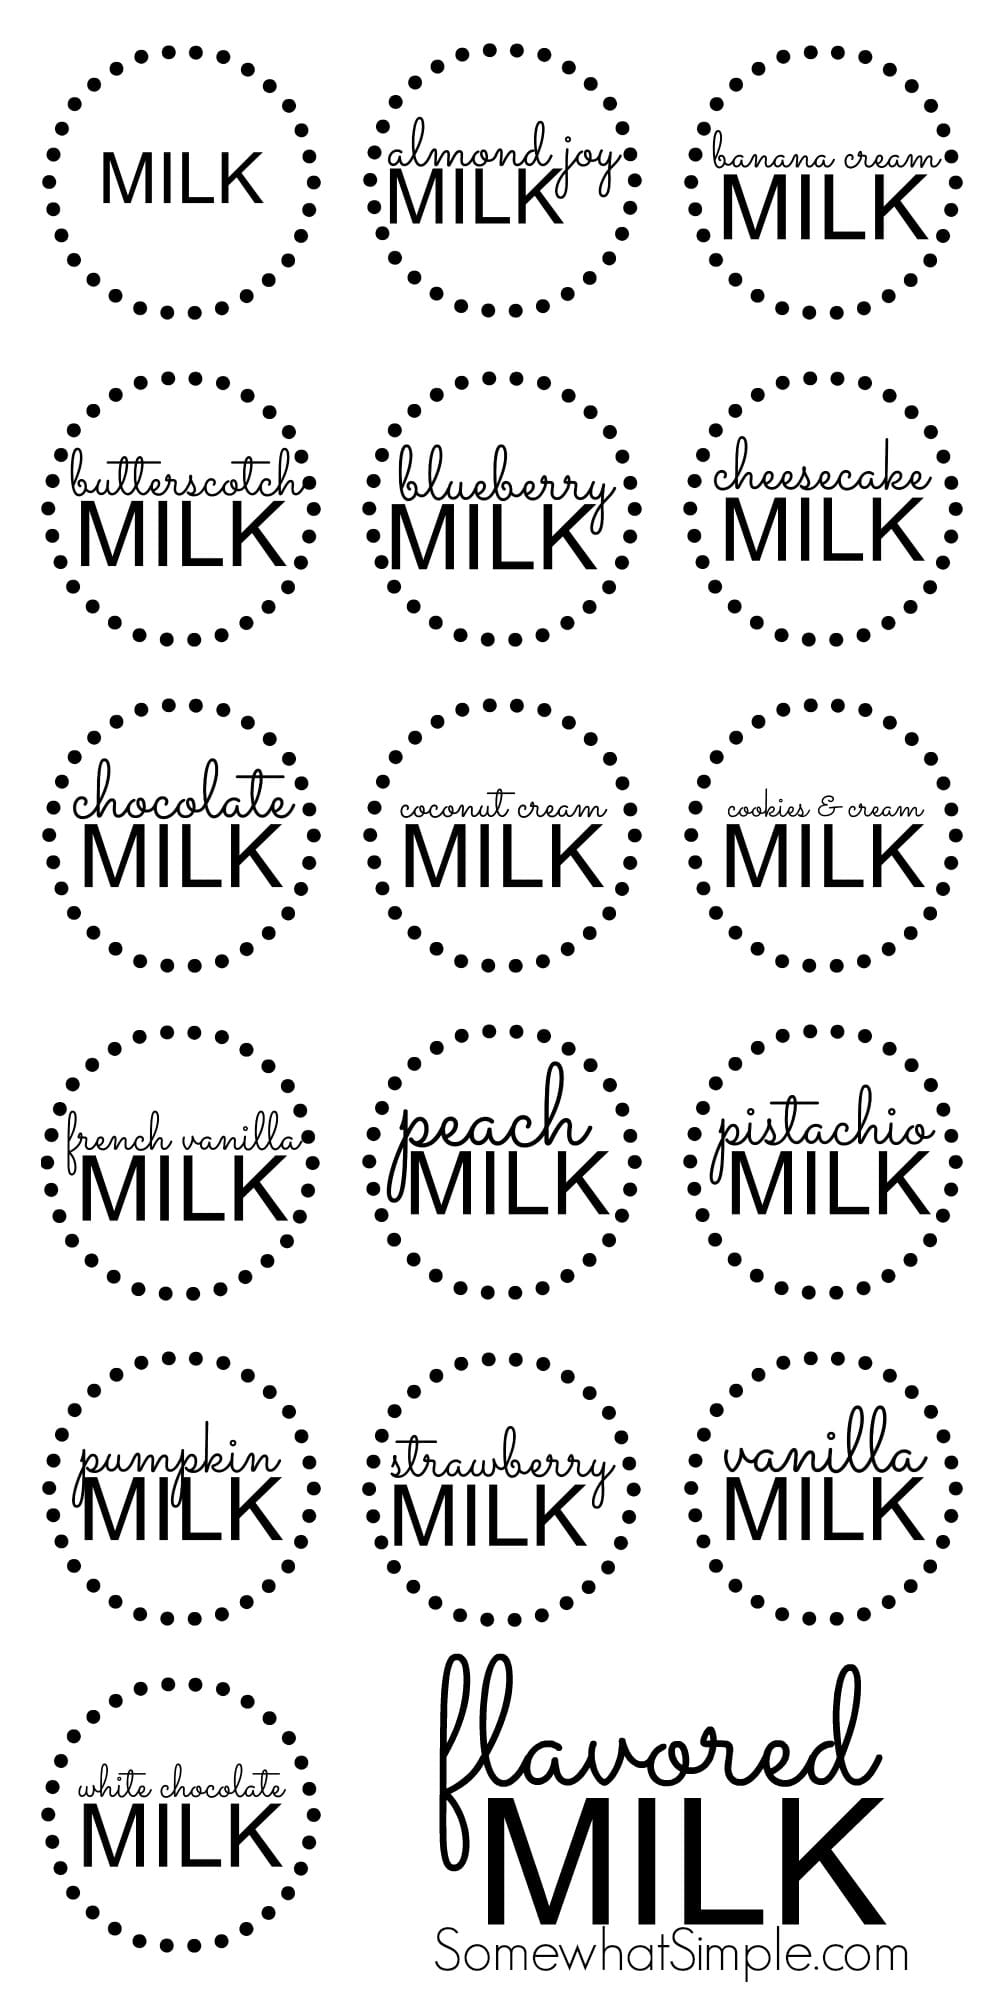 flavored milk